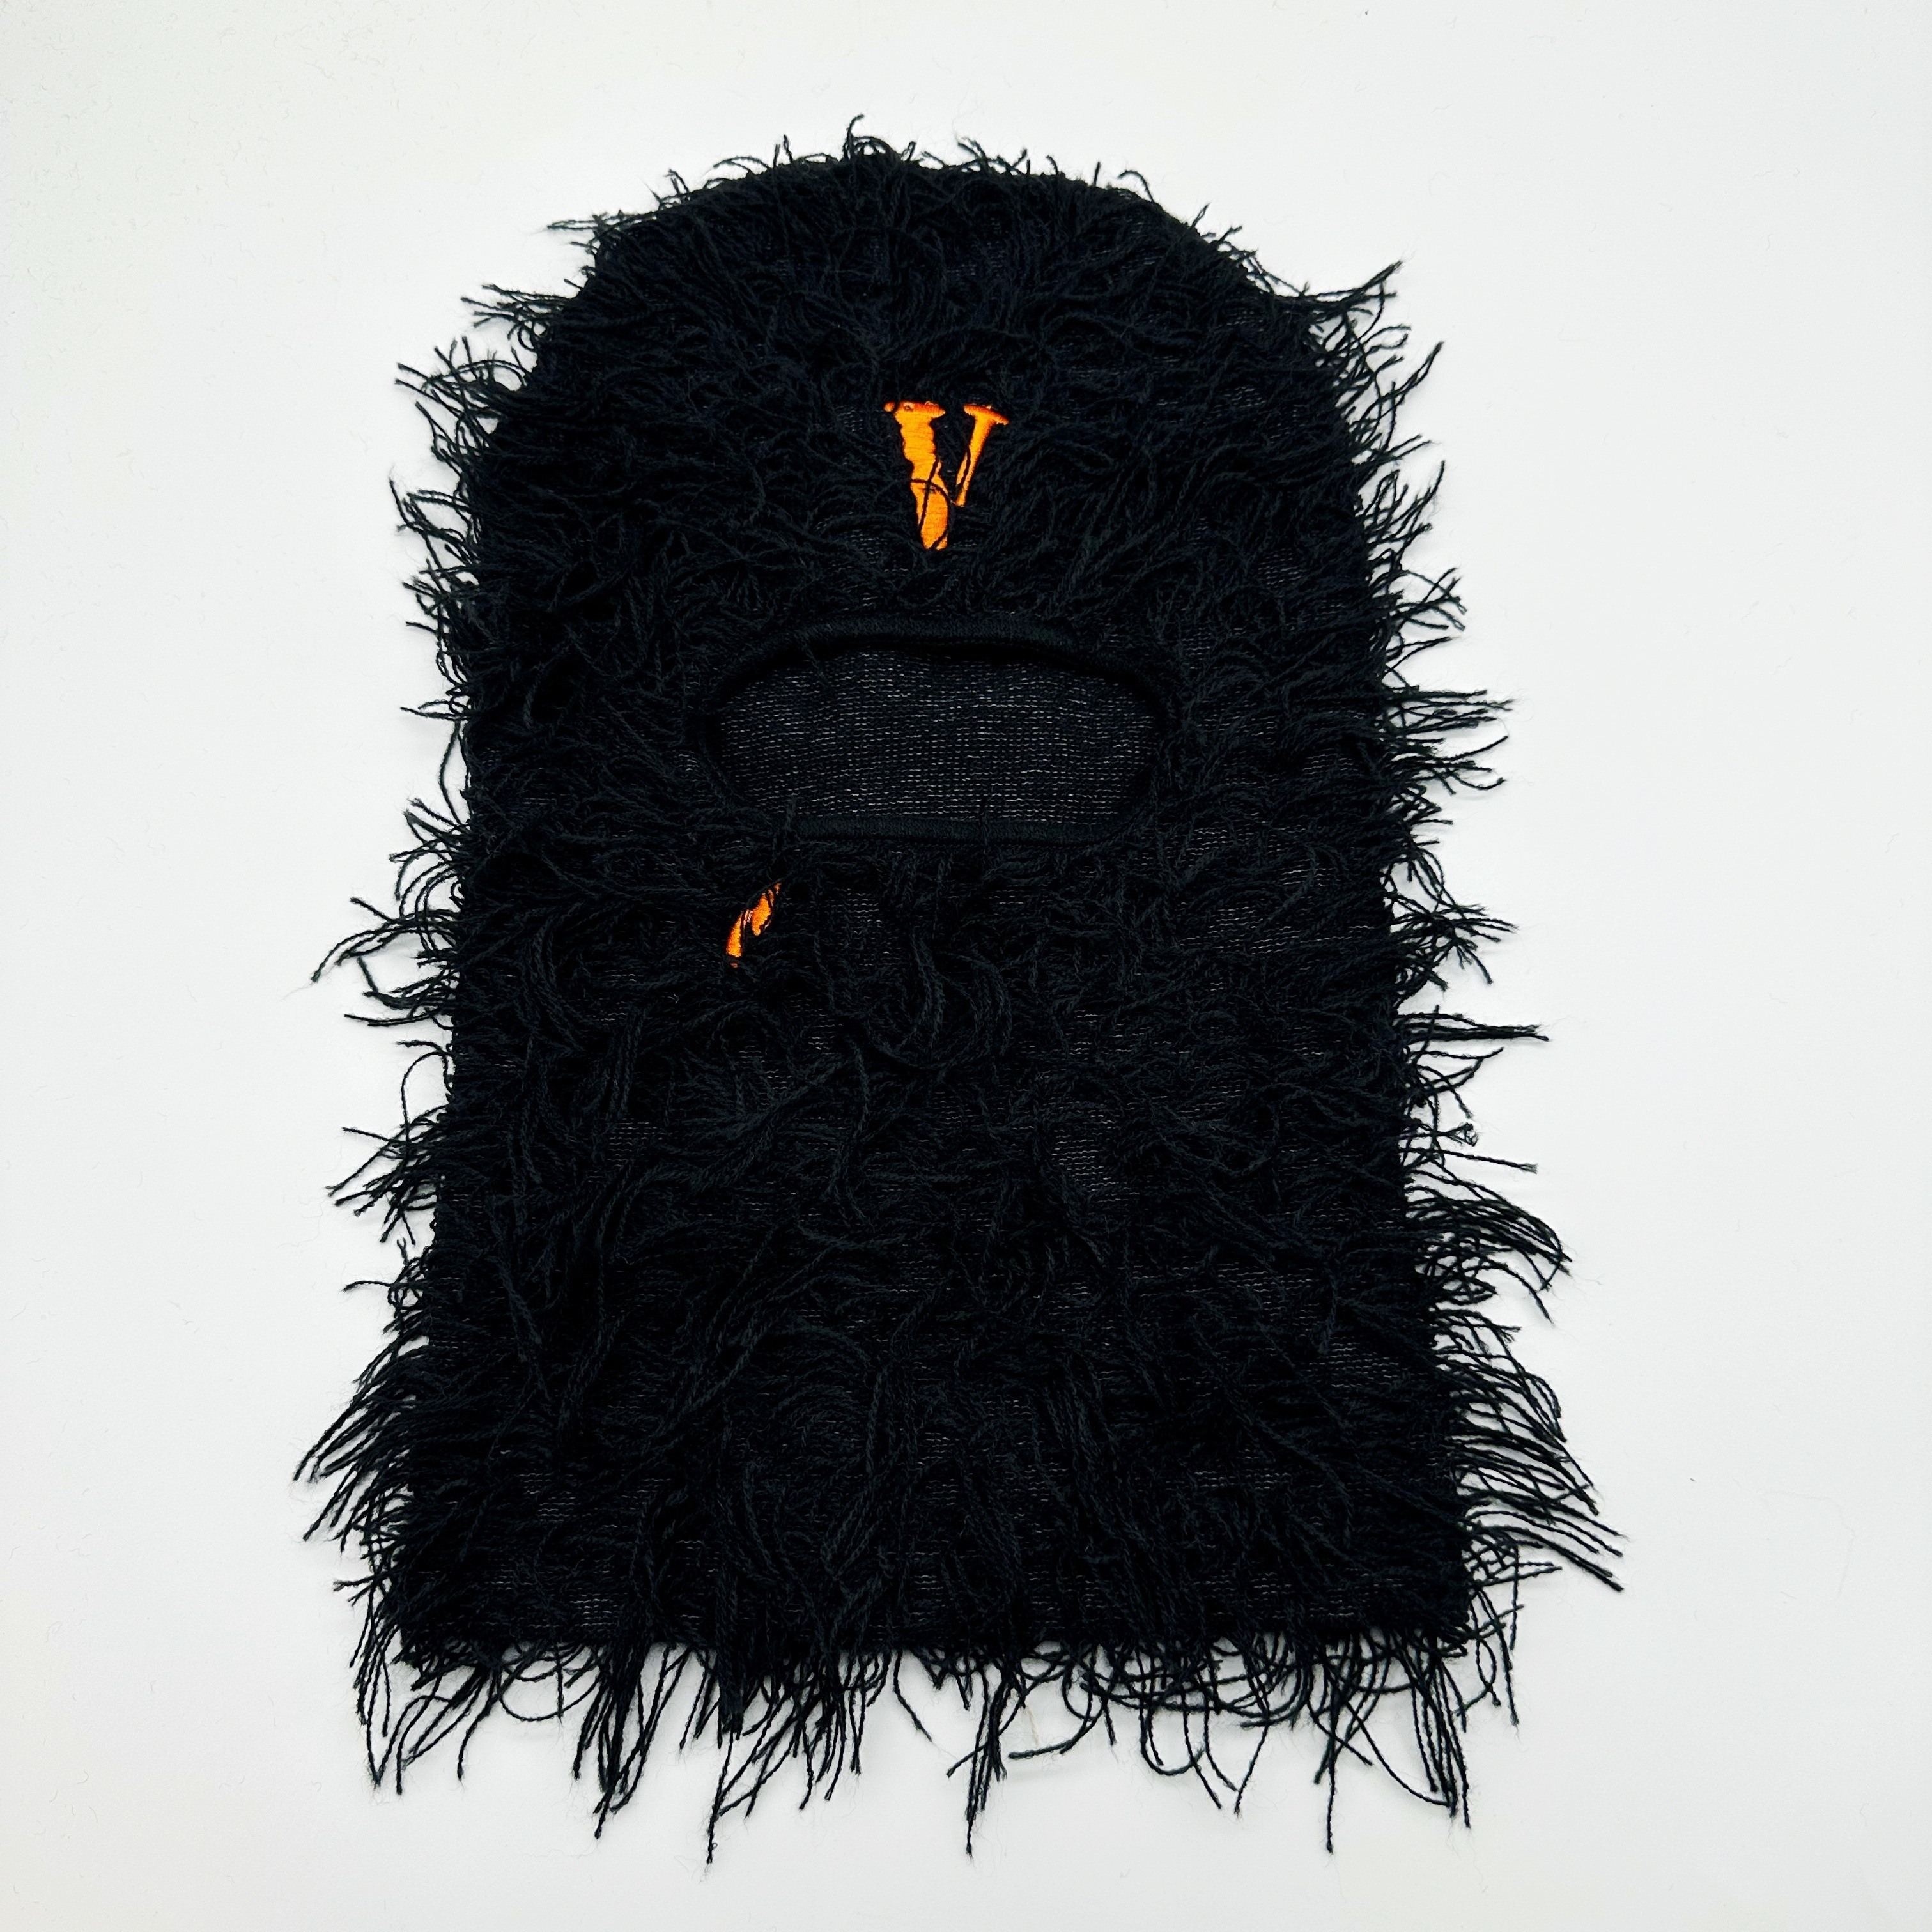 OFFBRAND, Accessories, Set Of 3 Random Hypebeast Ski Mask Pooh Shiesty  Style